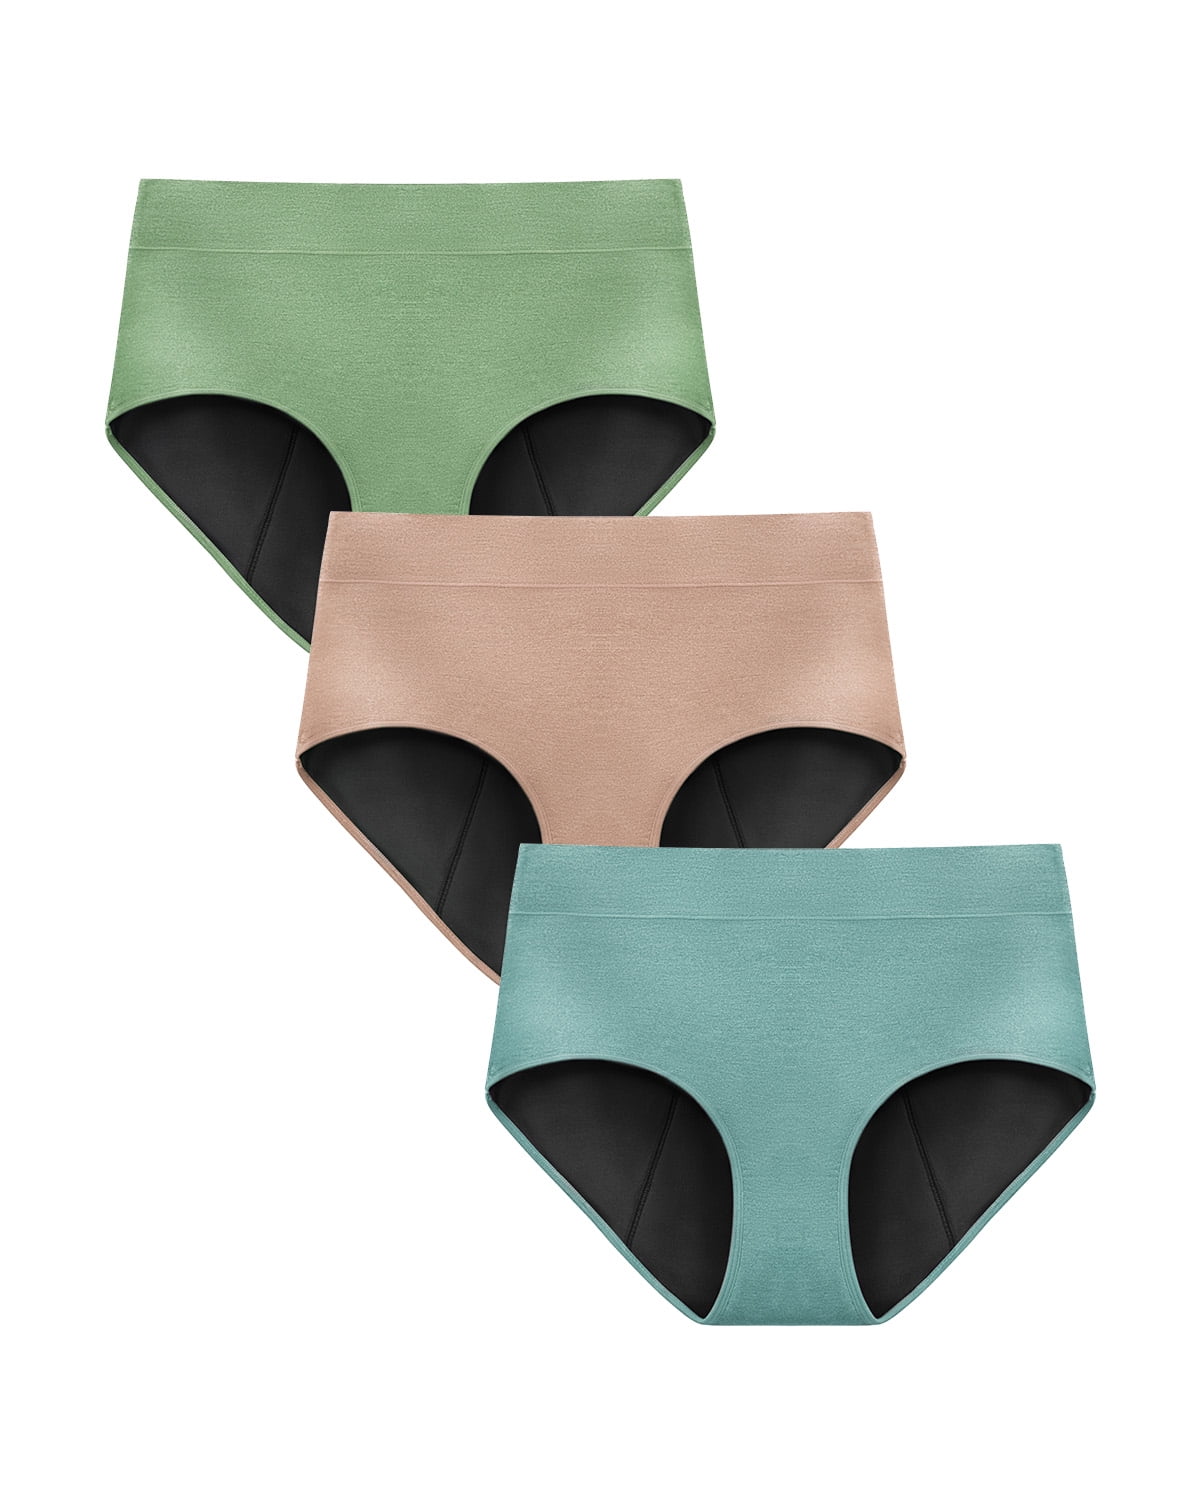 TIICHOO Leakproof Underwear for Women High Waisted Period Panties Briefs  Heavy Flow Menstrual Postpartum Underwear 3 Pack(XX-Large, 3 Black) 